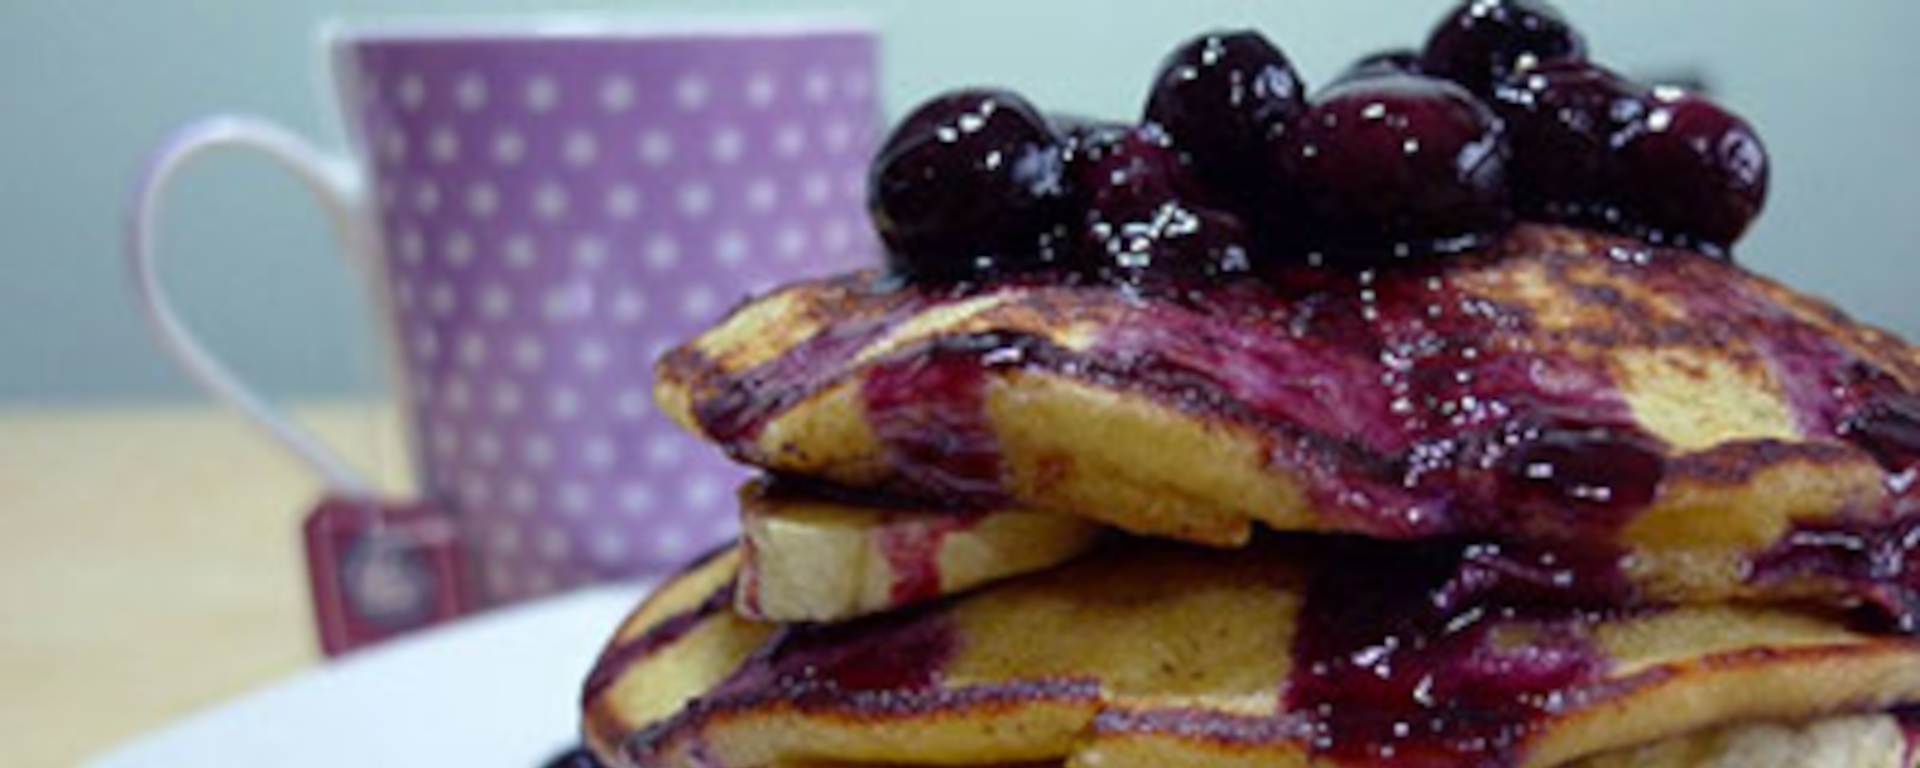 LuvMyRecipe.com - Banana Polenta Pancakes with Blueberry Sauce Featured